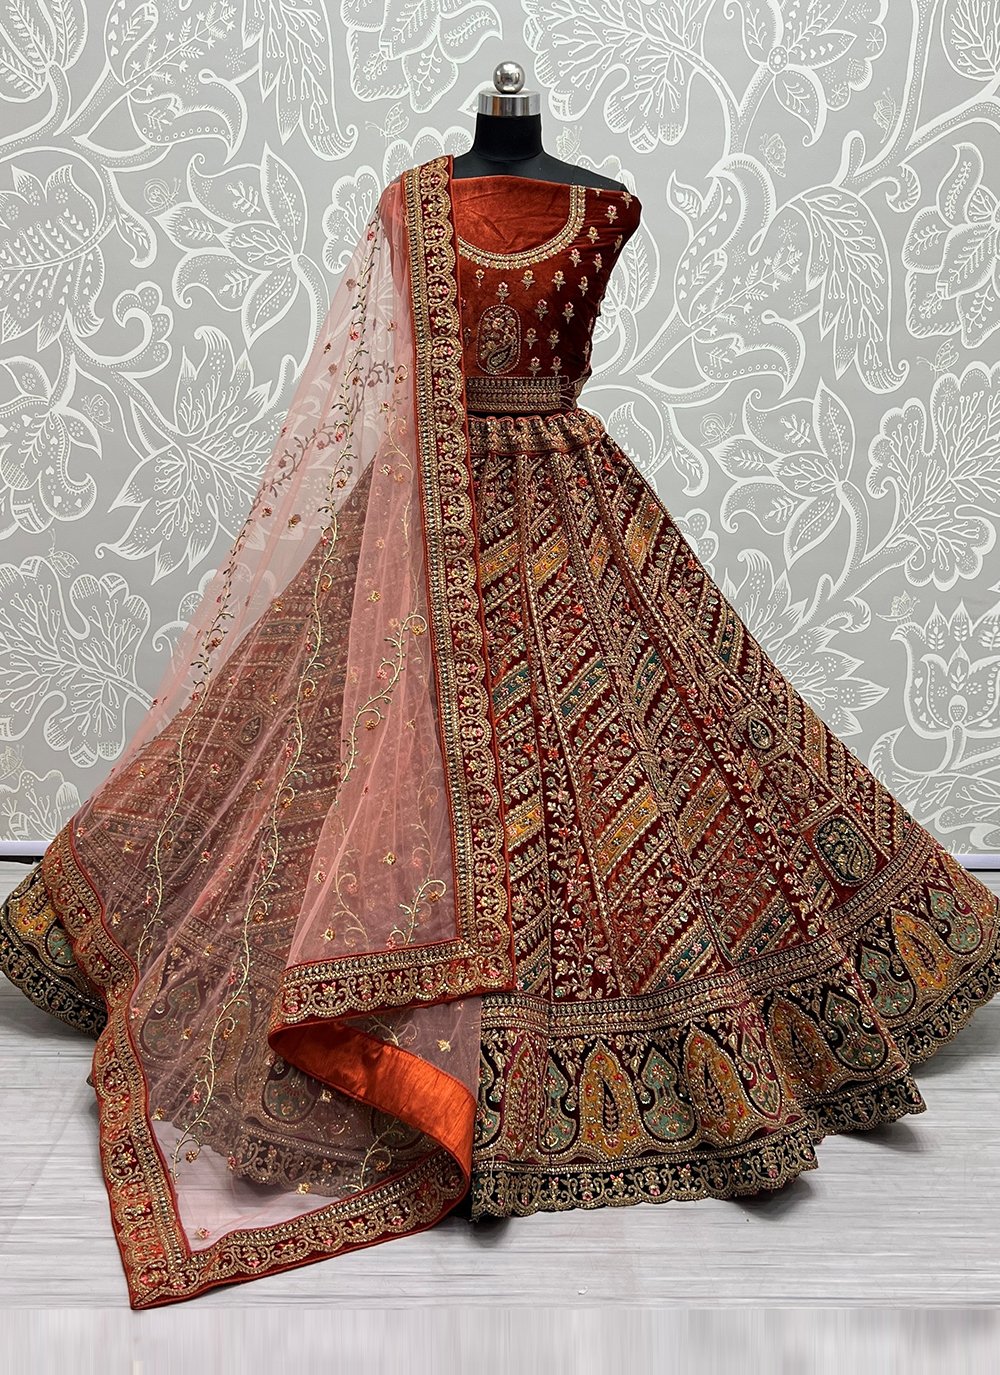 Lehenga Design Images For Girl | Indian outfits lehenga, Lehnga dress,  Indian gowns dresses